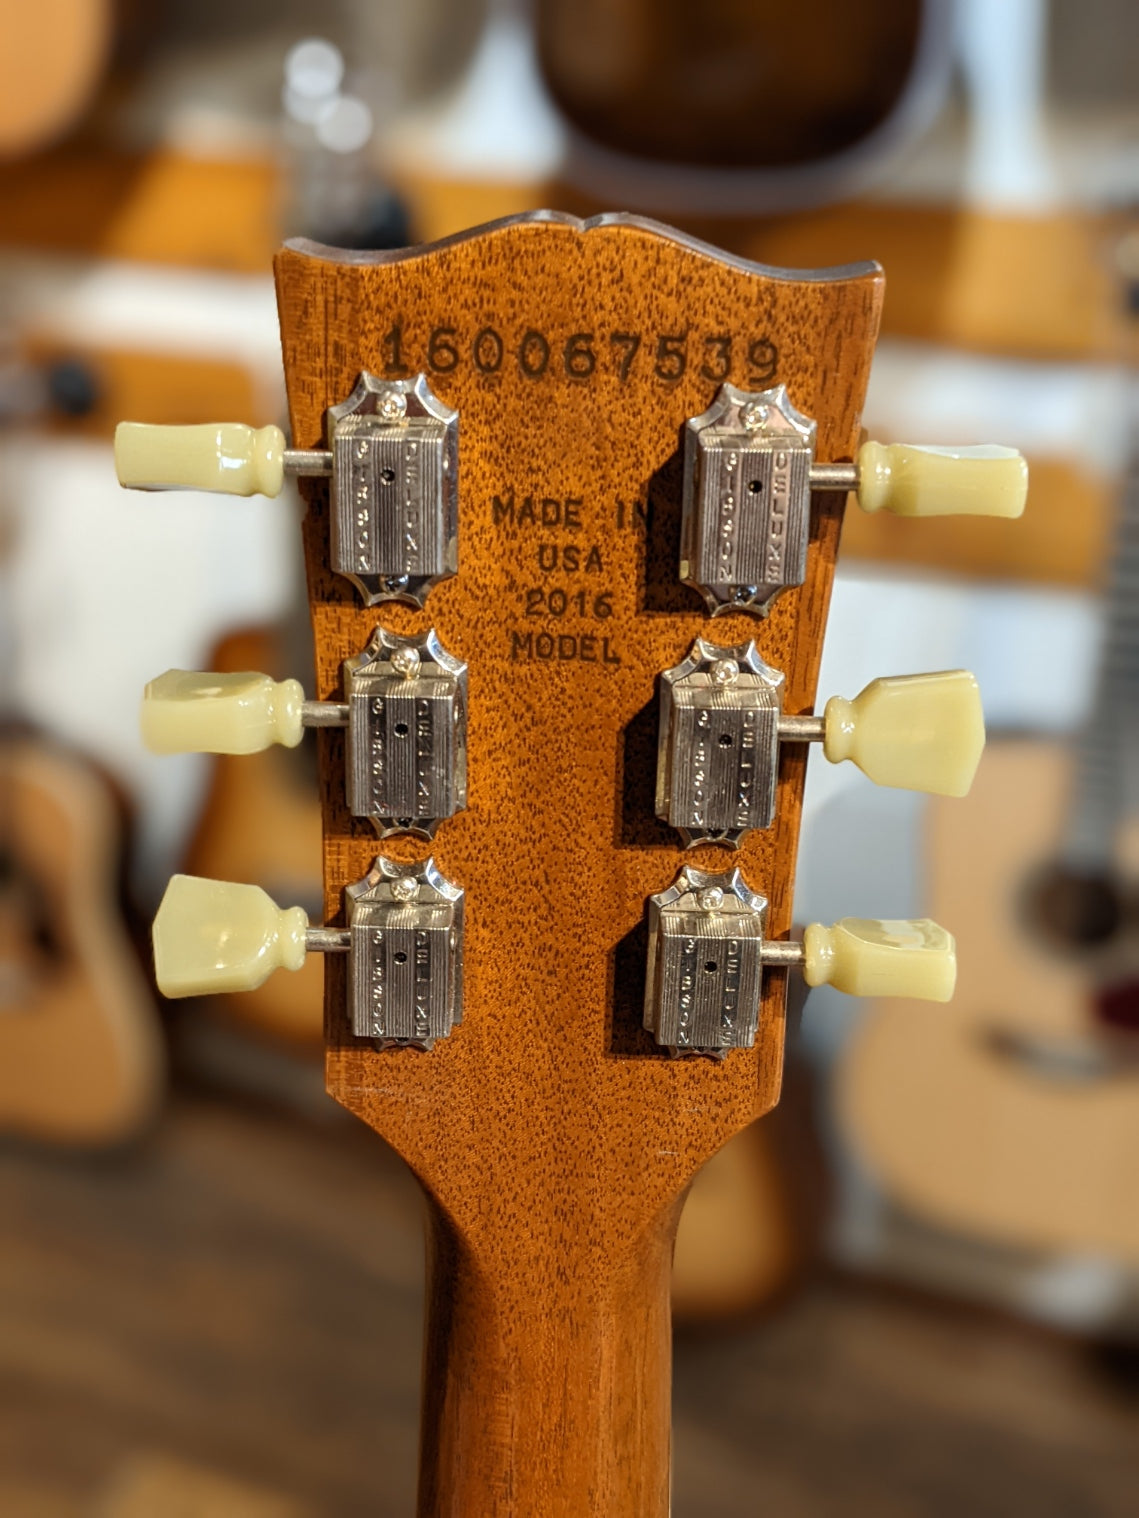 Gibson Limited Edition '50s Les Paul Standard Satin Honey Burst w/Case (2016)